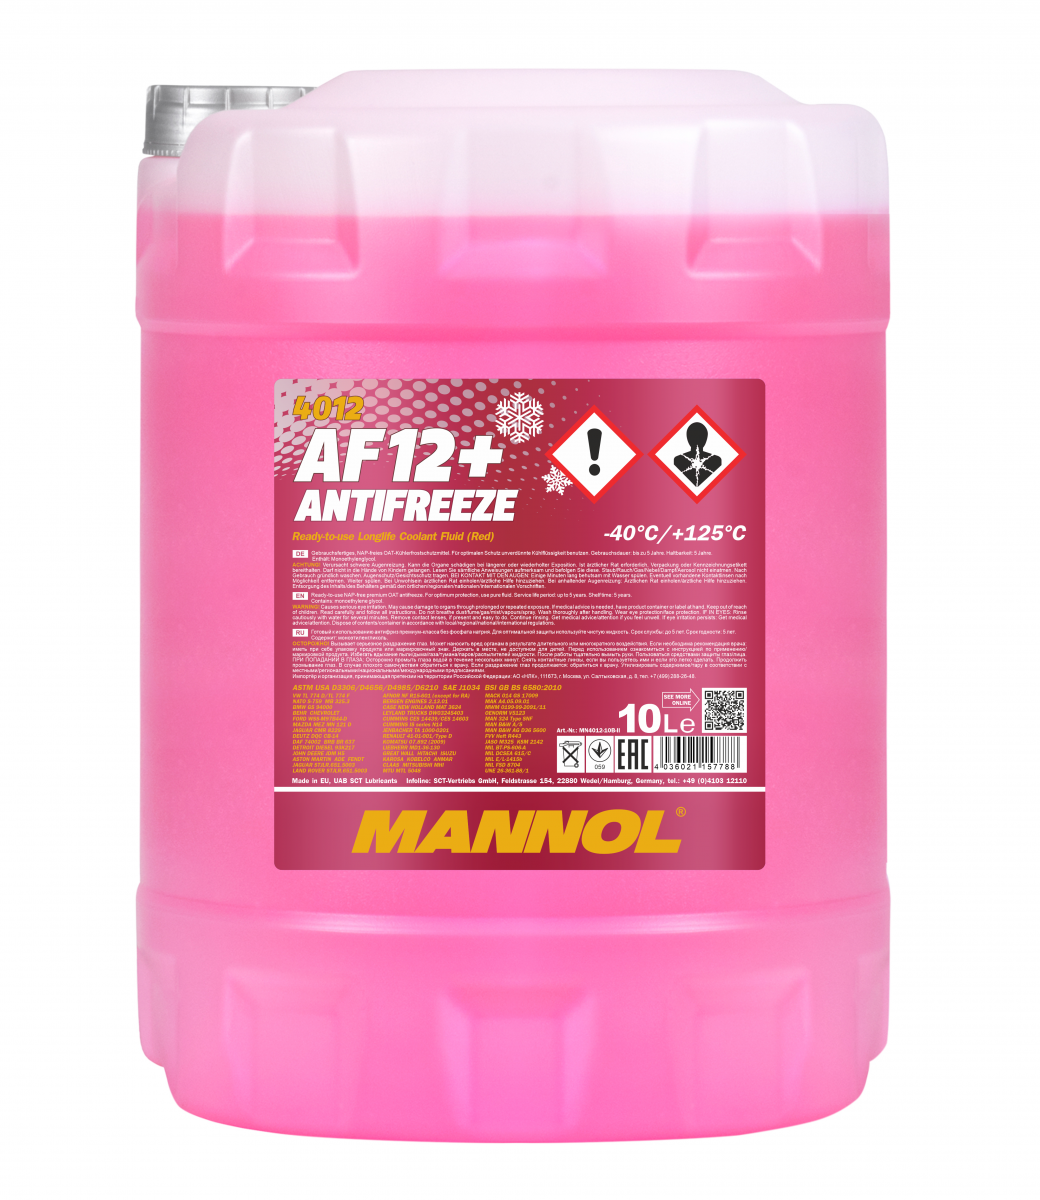 Mannol - 4012 Antifreeze AF12+ (Concentrated to -40) Longlife